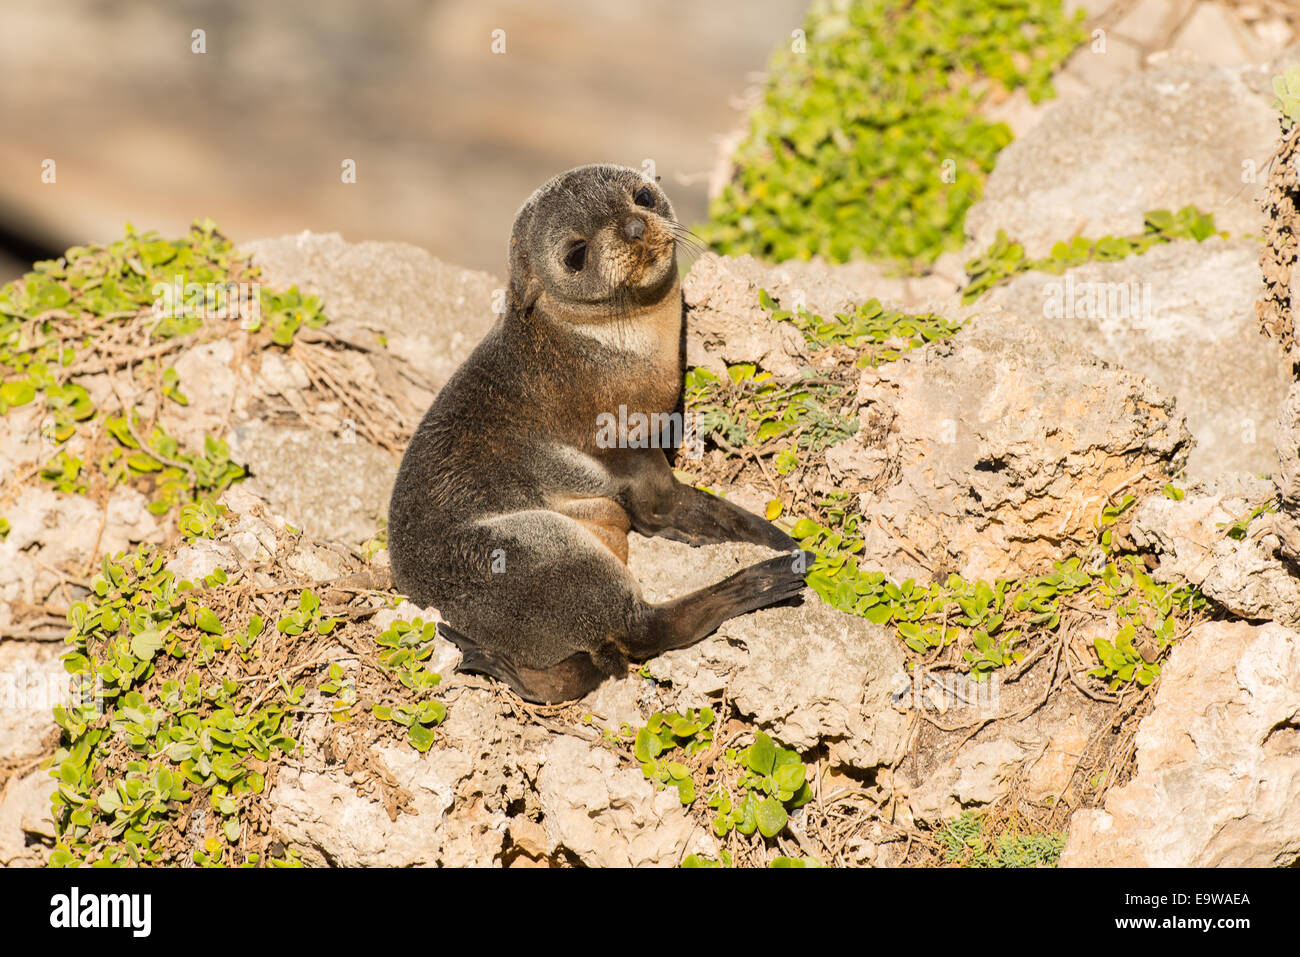 Stock Foto von New Zealand Fur Seal Pup sitzen am Ufer auf Kangaroo Island, Australien. Stockfoto